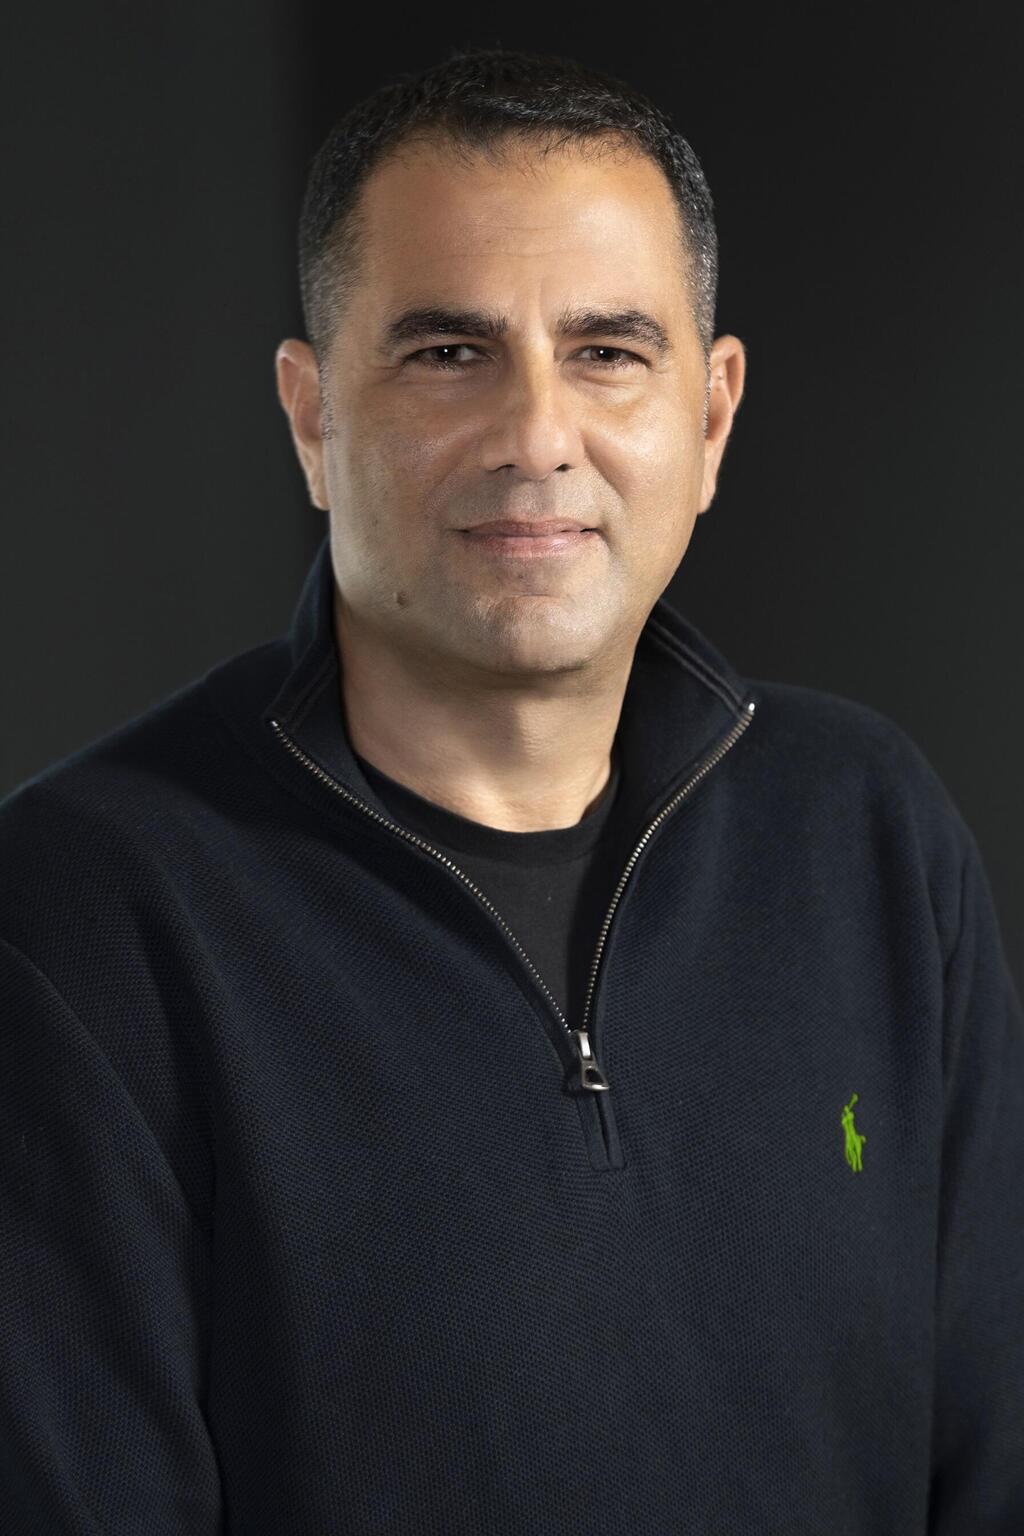  Shlomi Ben Haim, Co-Founder and CEO, JFrog.